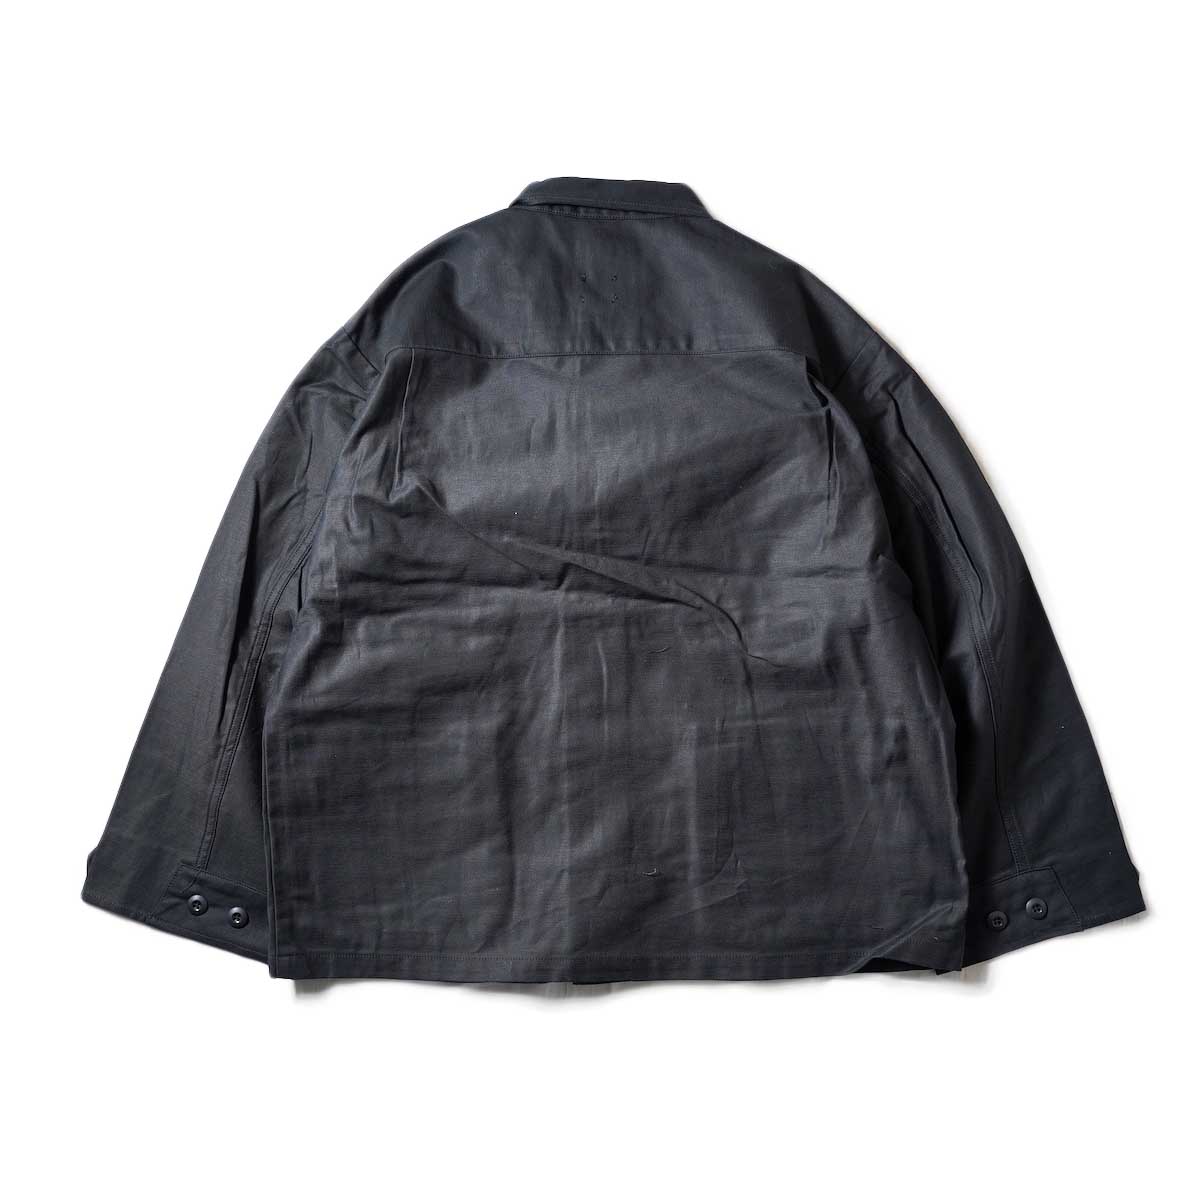 UNIVERSAL PRODUCTS / Gung Ho Fatigue Jacket (Black)背面